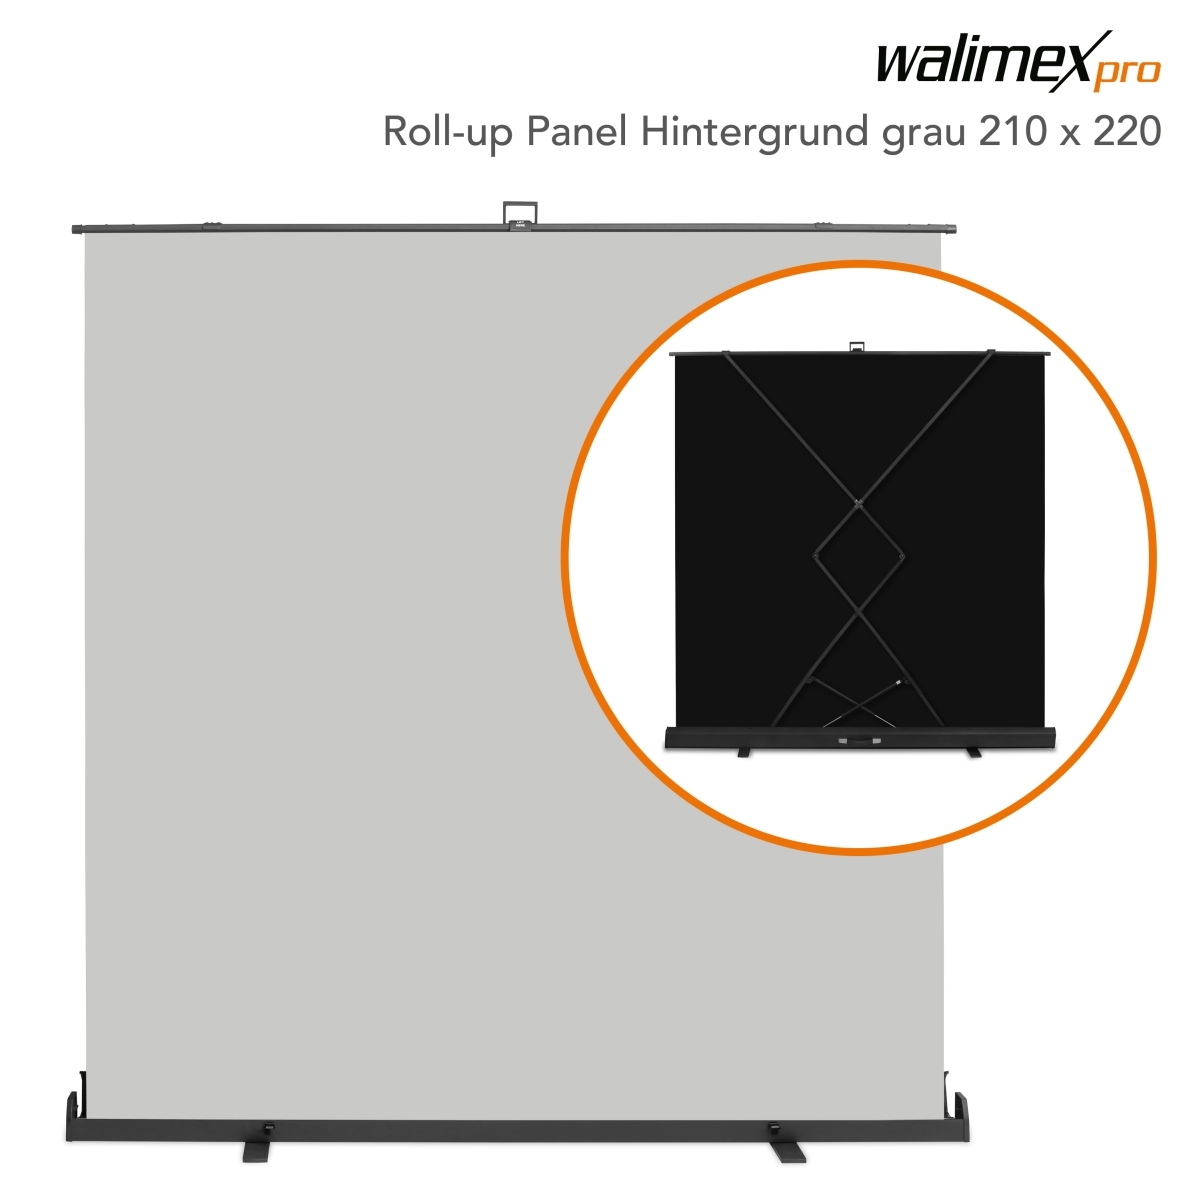 Walimex pro Roll-up Panel Hintergrund grau 210x220 - walimex / walime